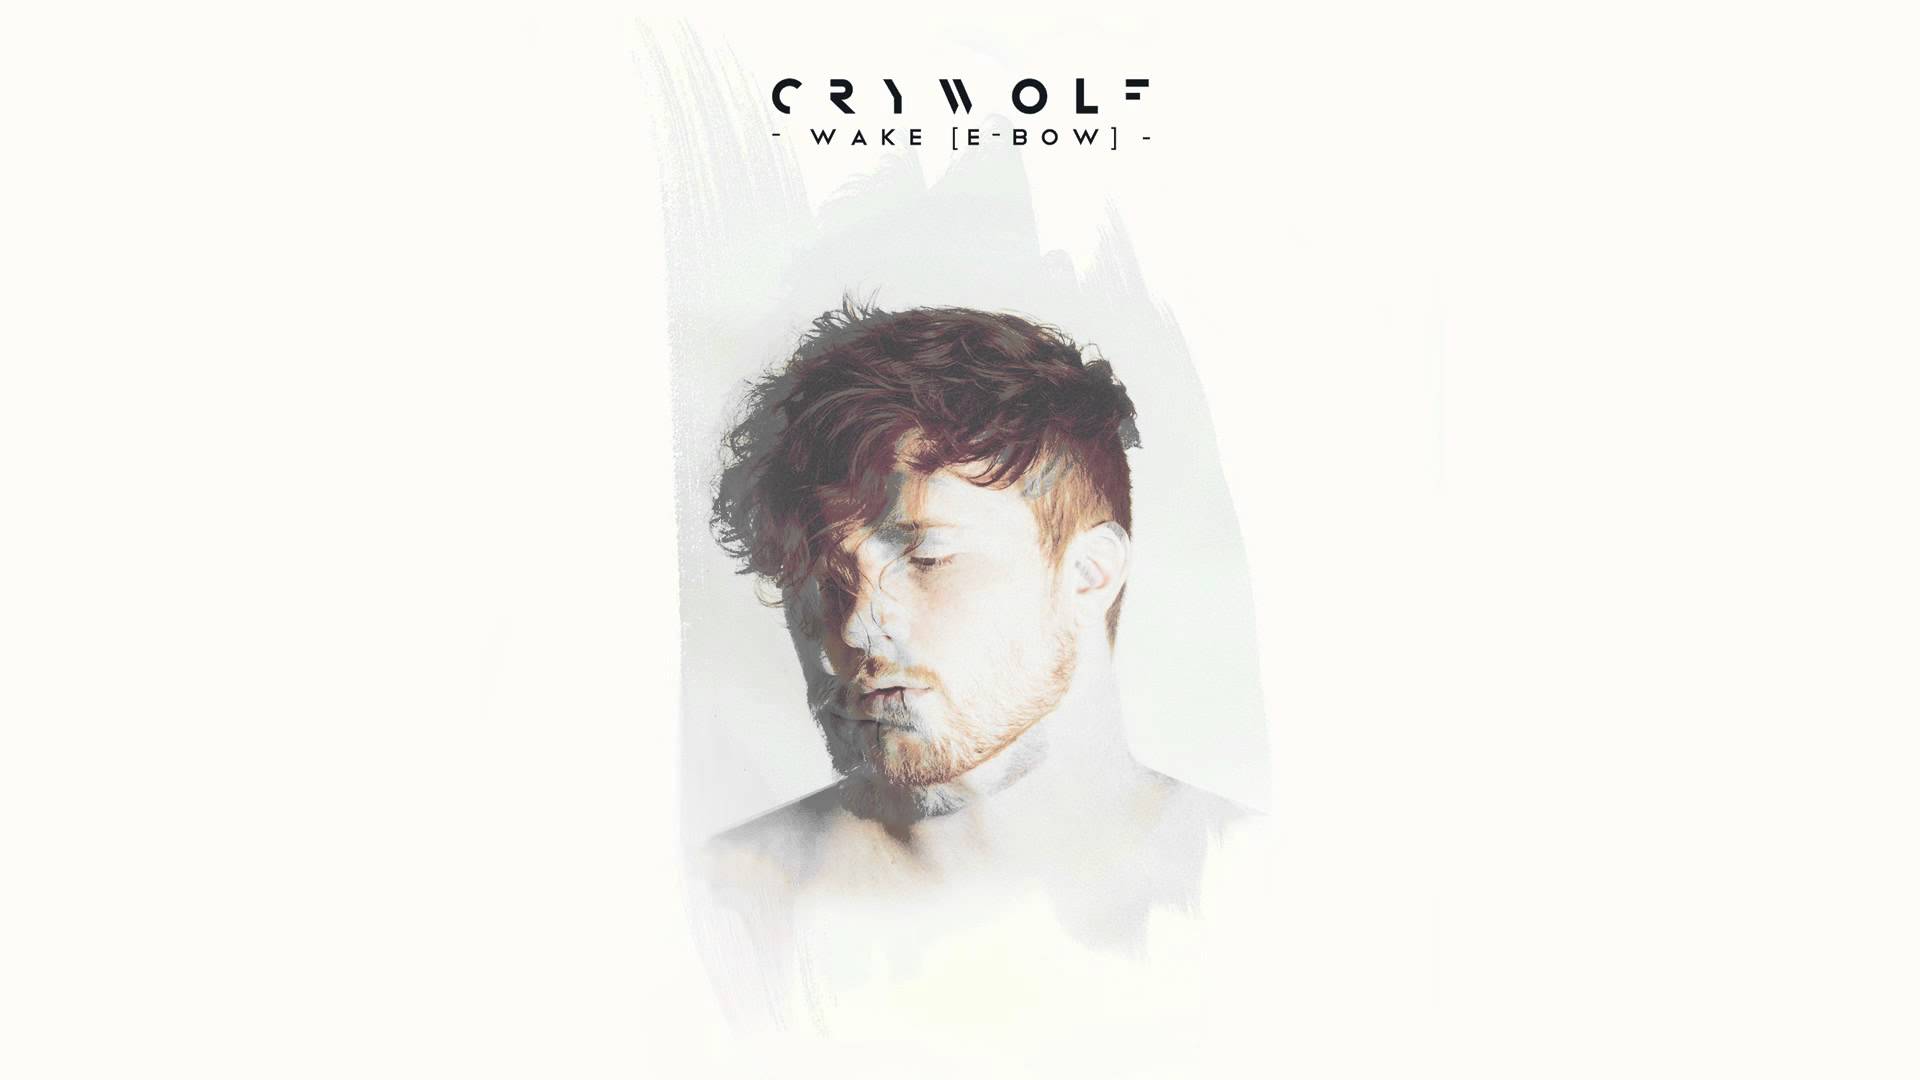 Crywolf - Wake